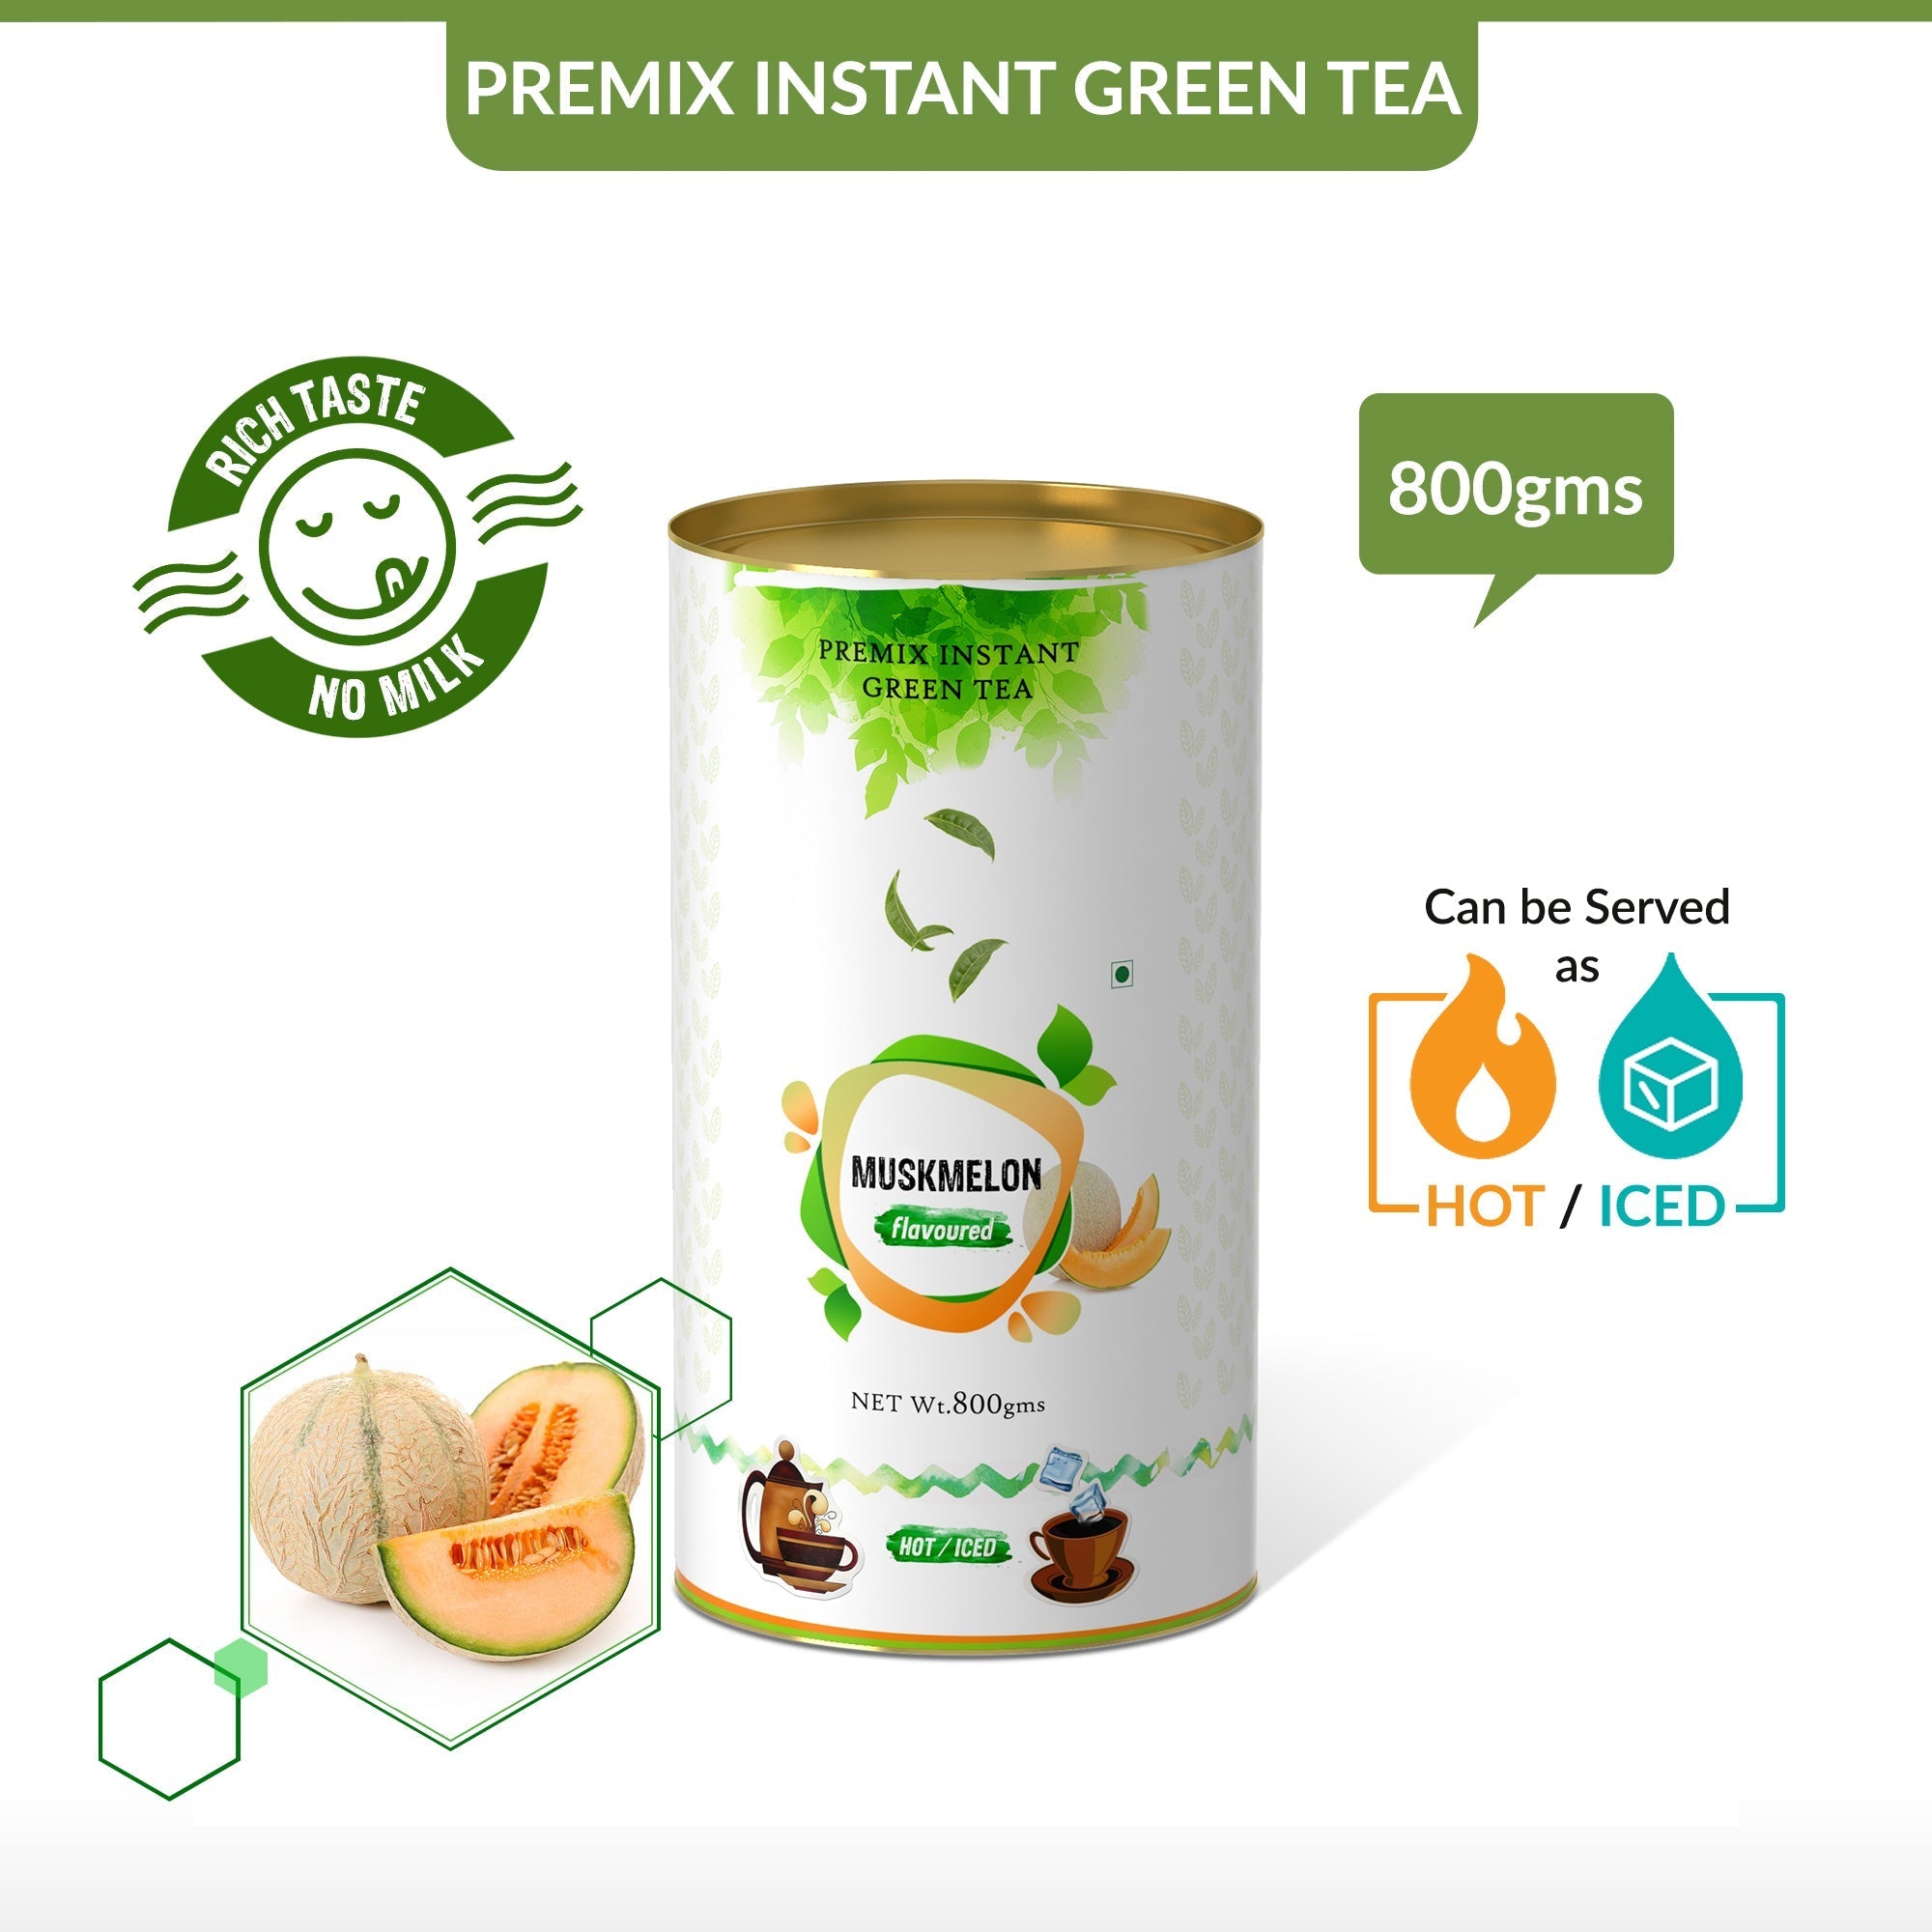 Muskmelon Flavored Instant Green Tea - 800 gms